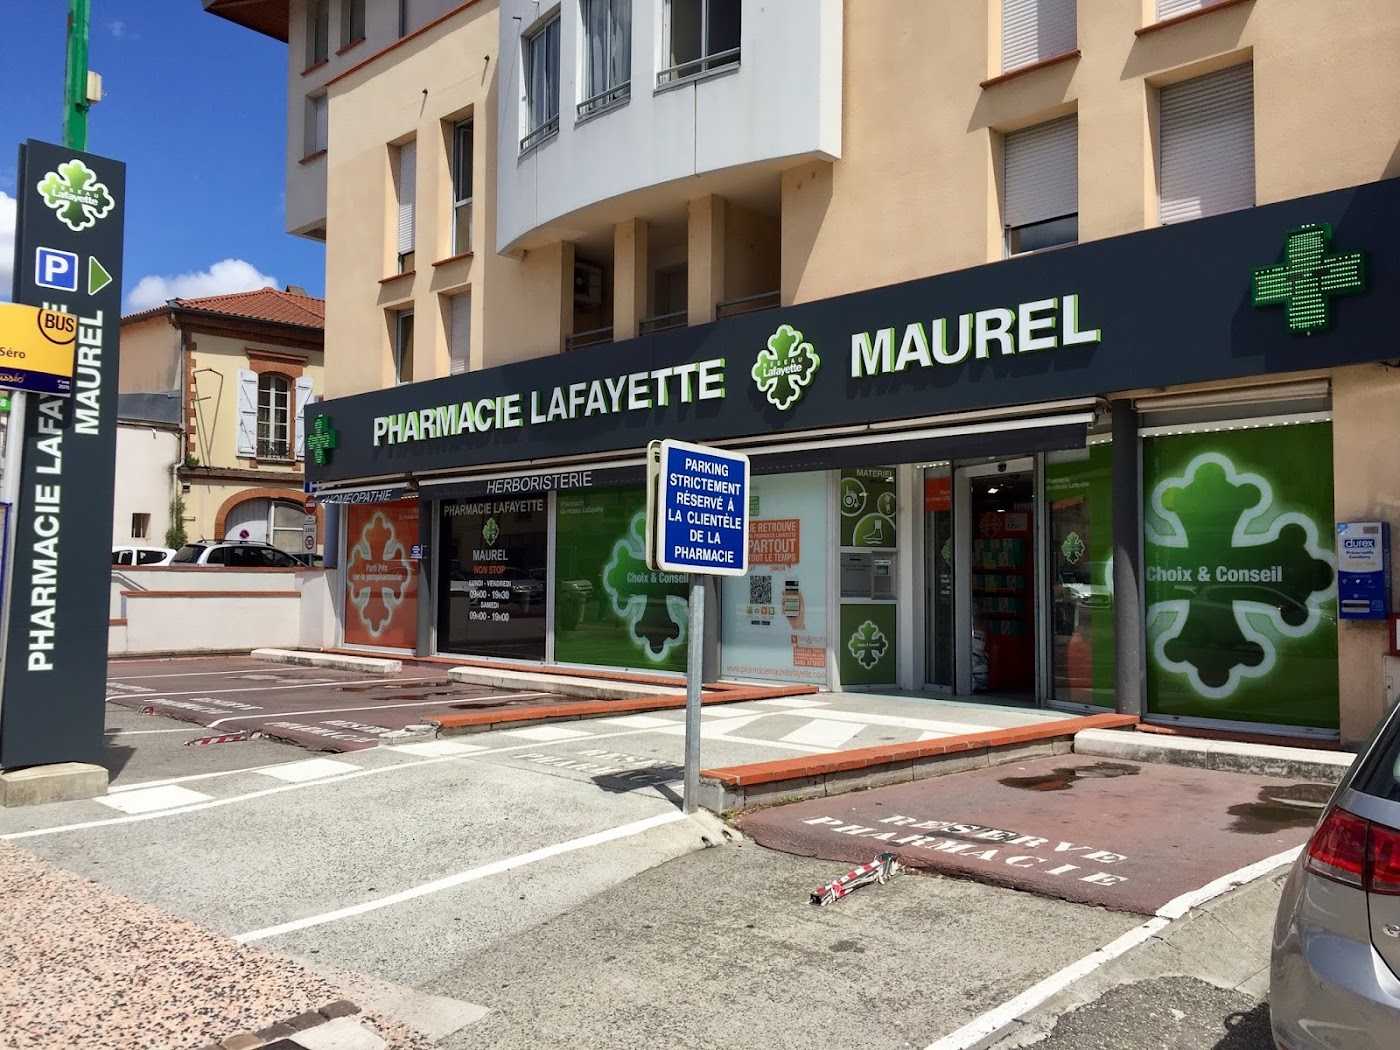 Pharmacie Lafayette Maurel